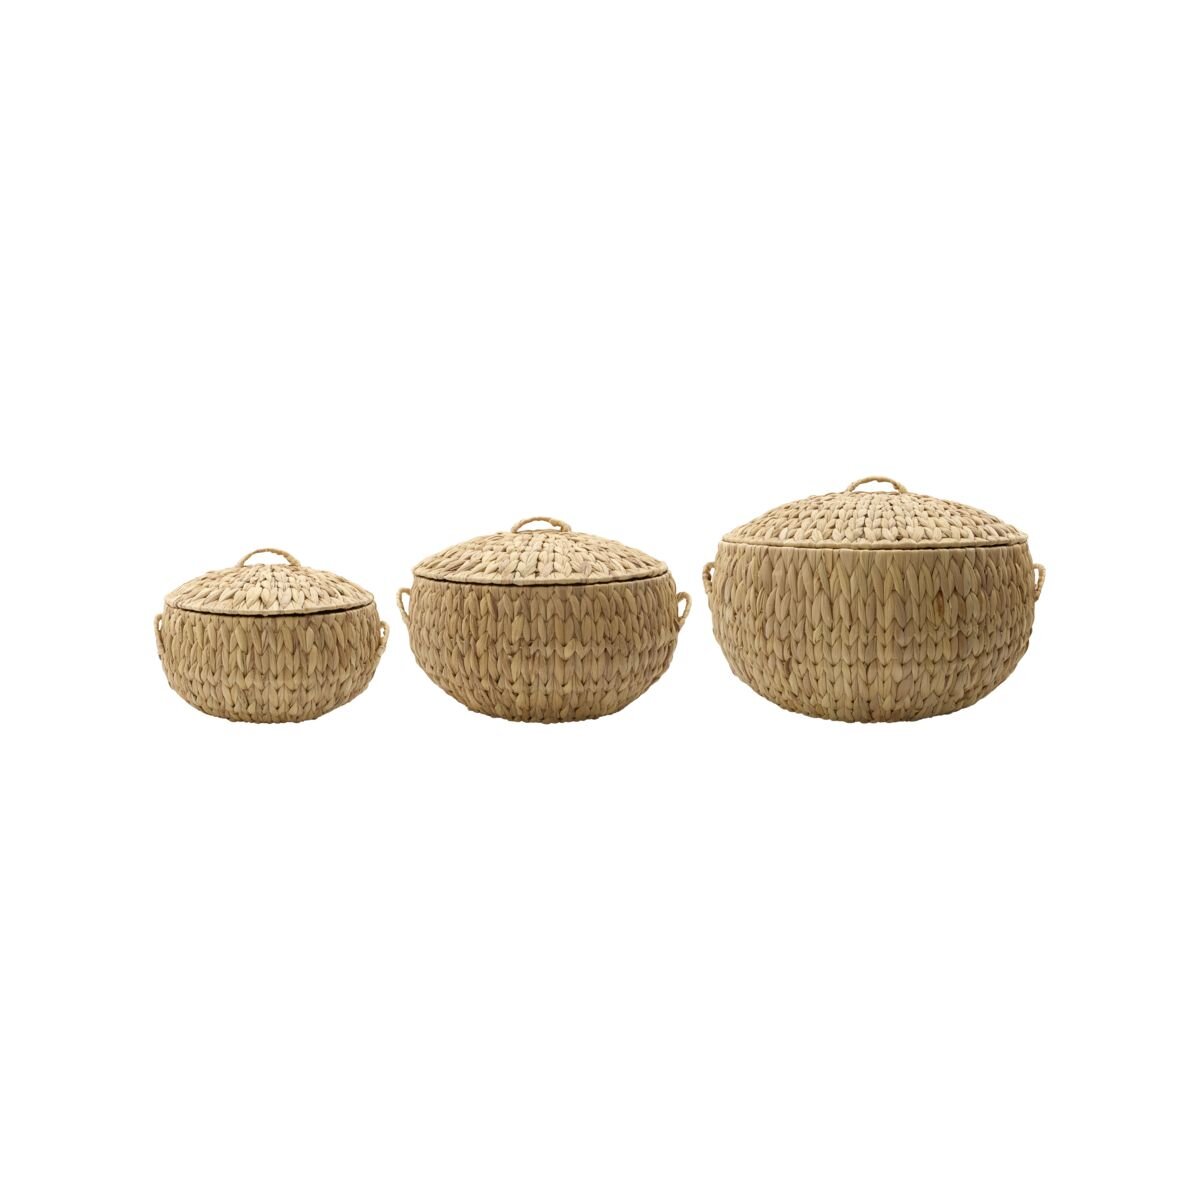 Rata - 3 vegetable-fibre baskets